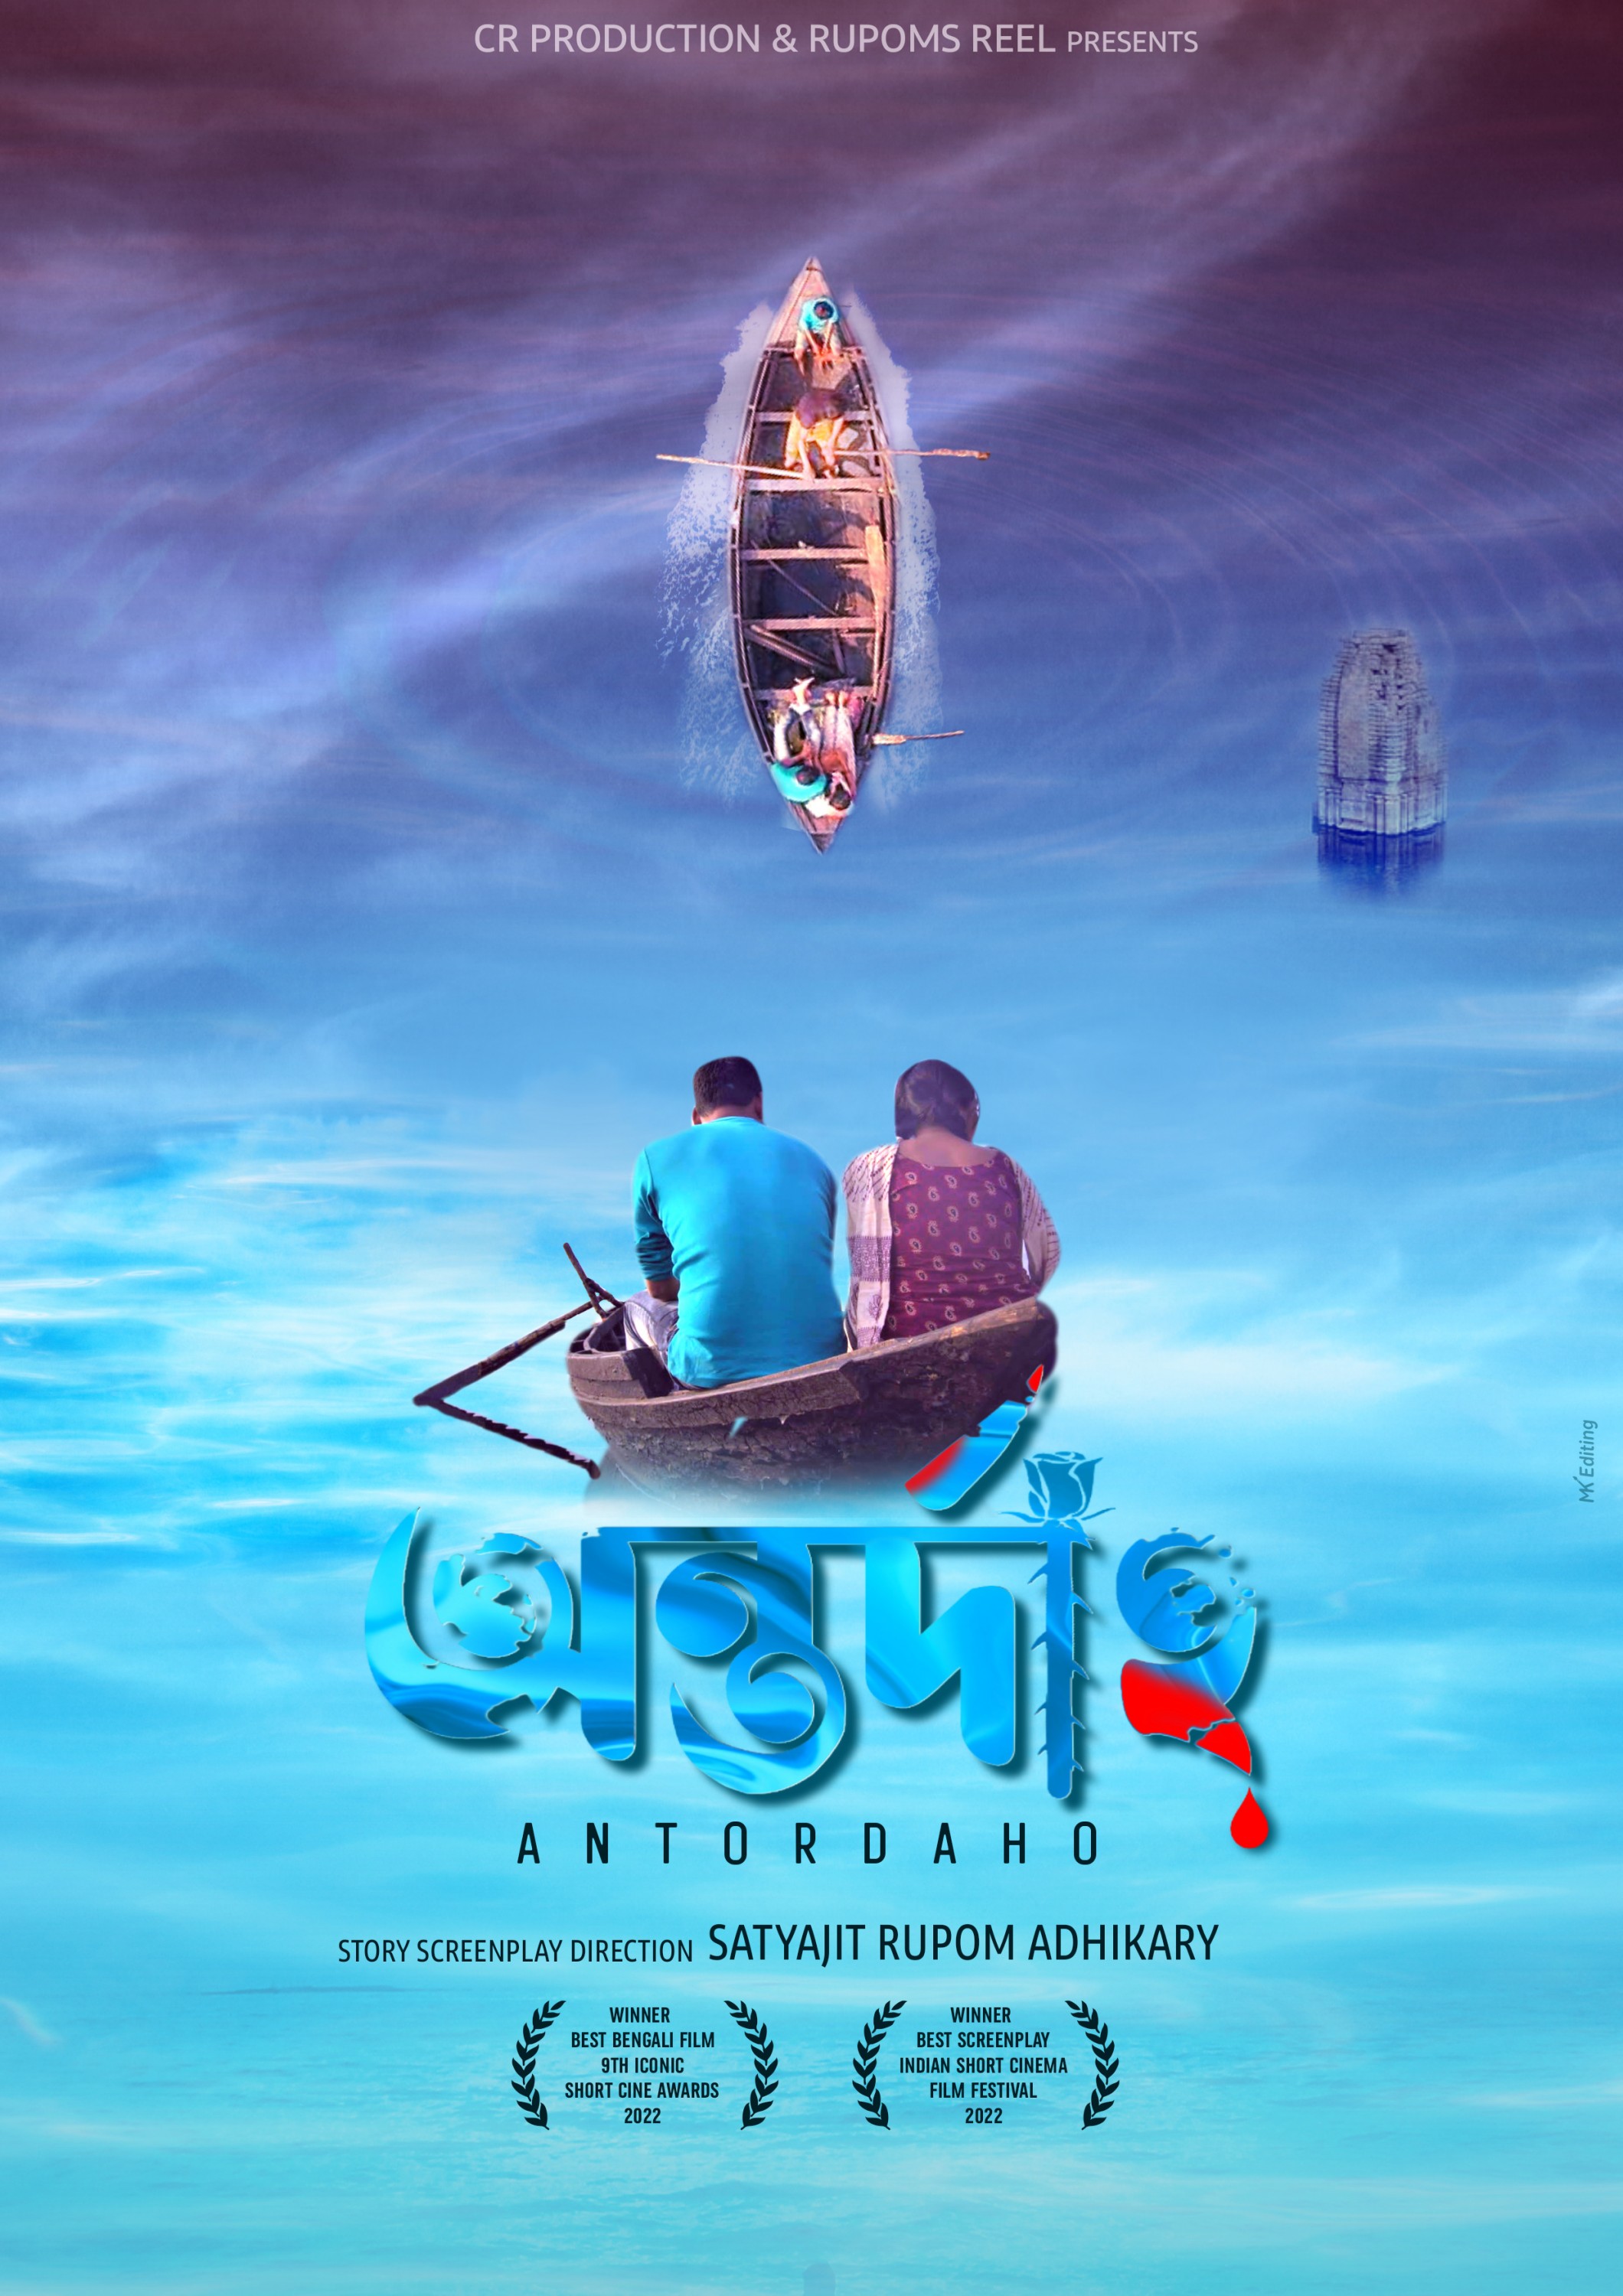 Mega Sized Movie Poster Image for Antordaho